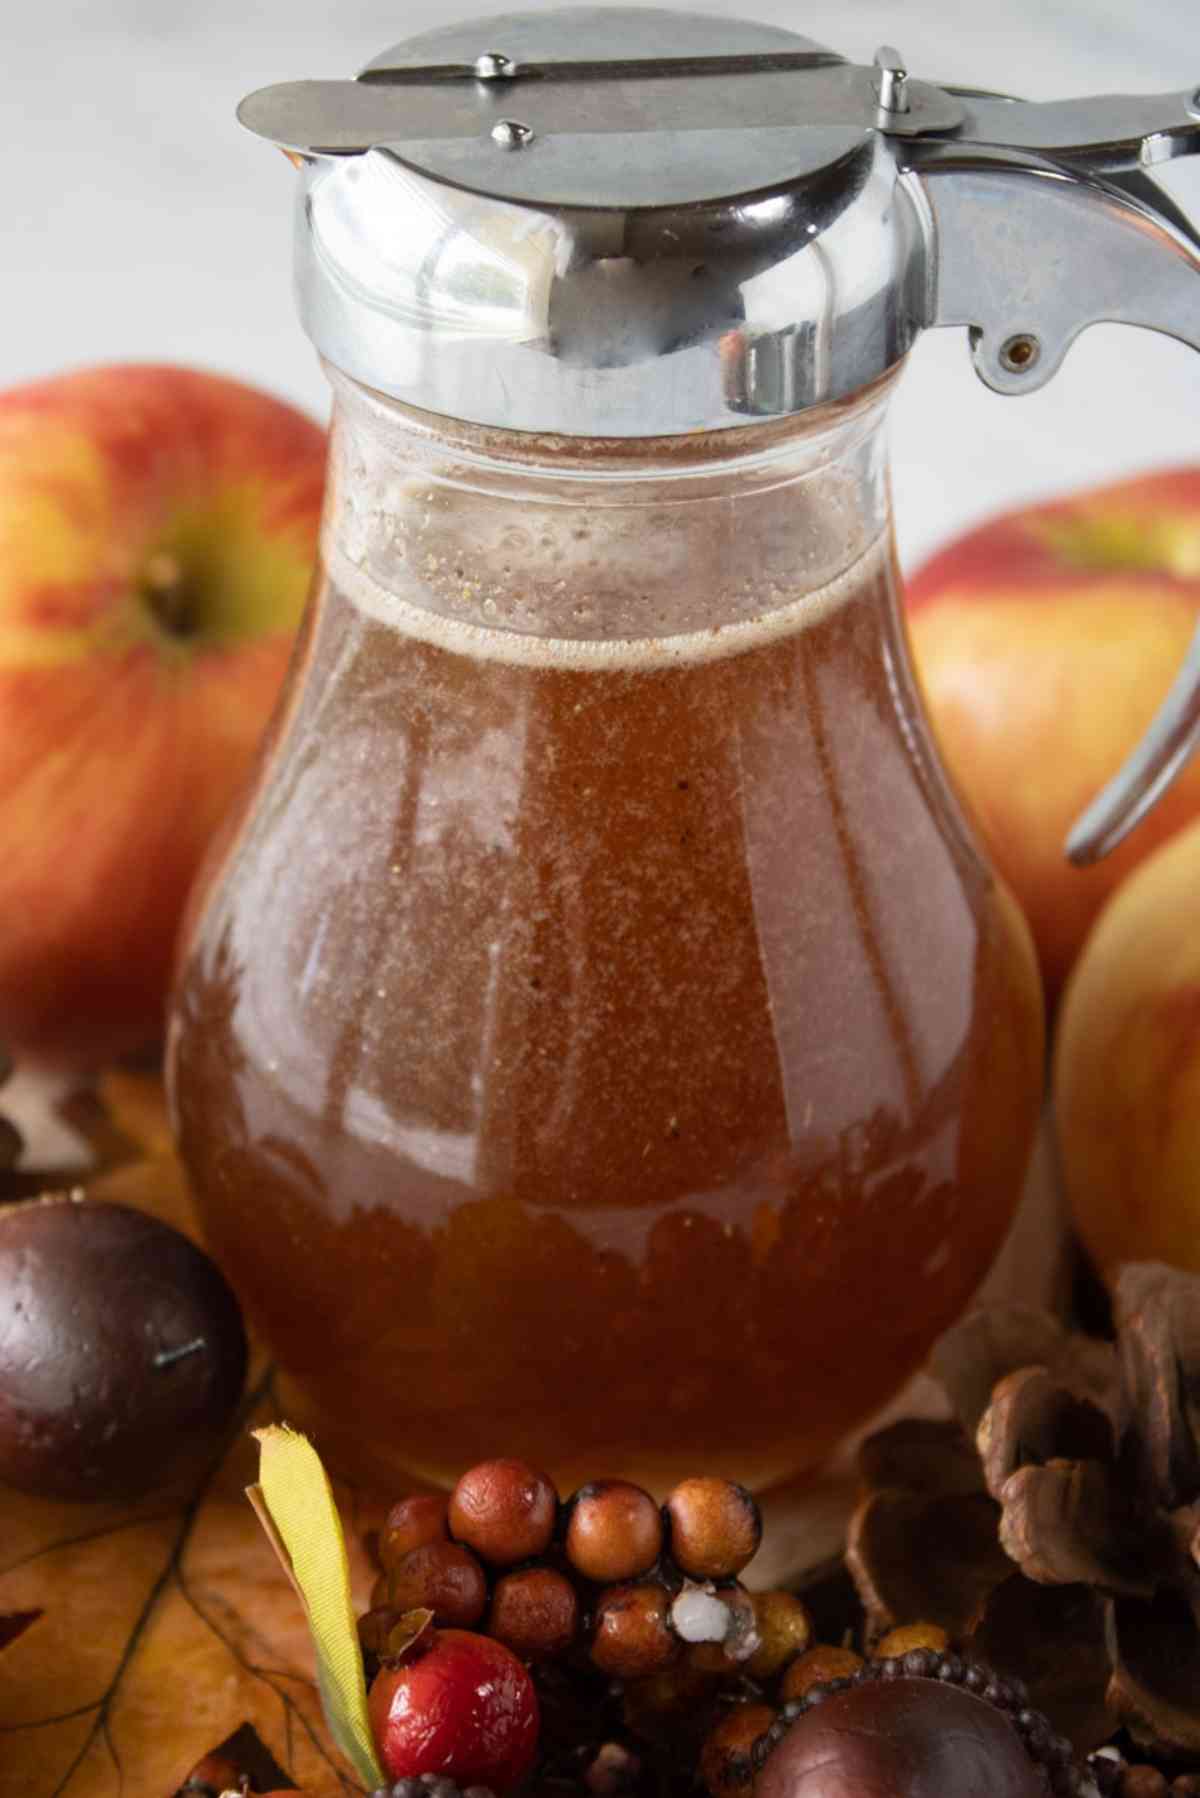 Syrup bottle full of Homemade Apple Cider Syrup!